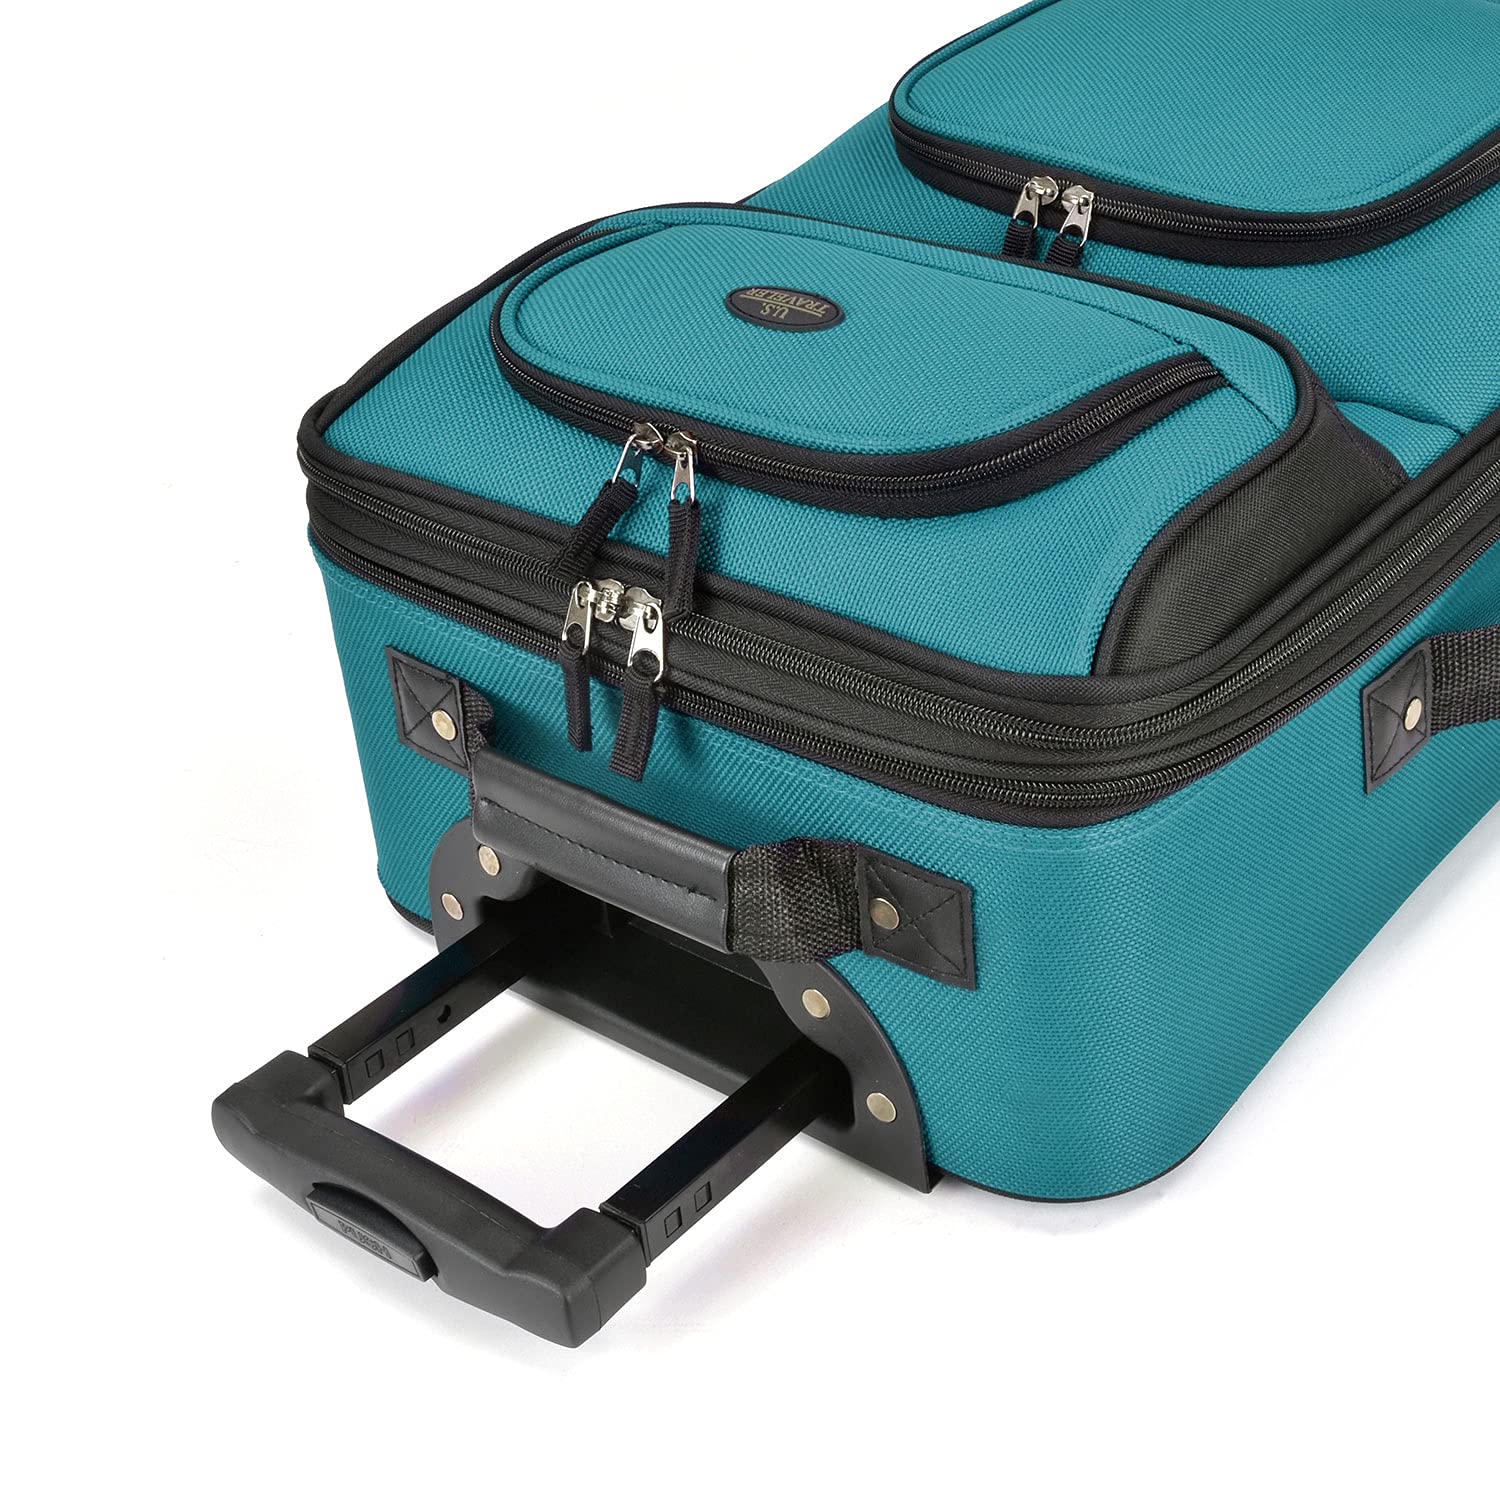 U.S. Traveler Rio Rugged Fabric Expandable Carry-on Luggage Set, Teal, 2 Wheel